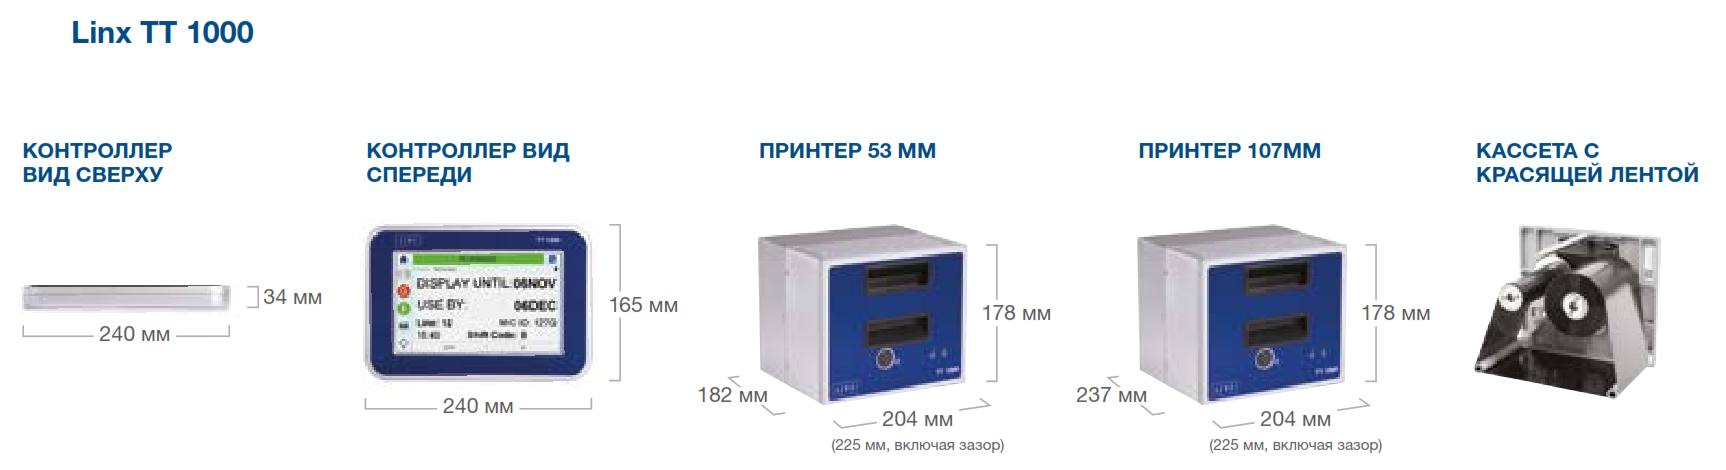 Clipboard02 - Термопринтер для печати этикеток LINX TT1000